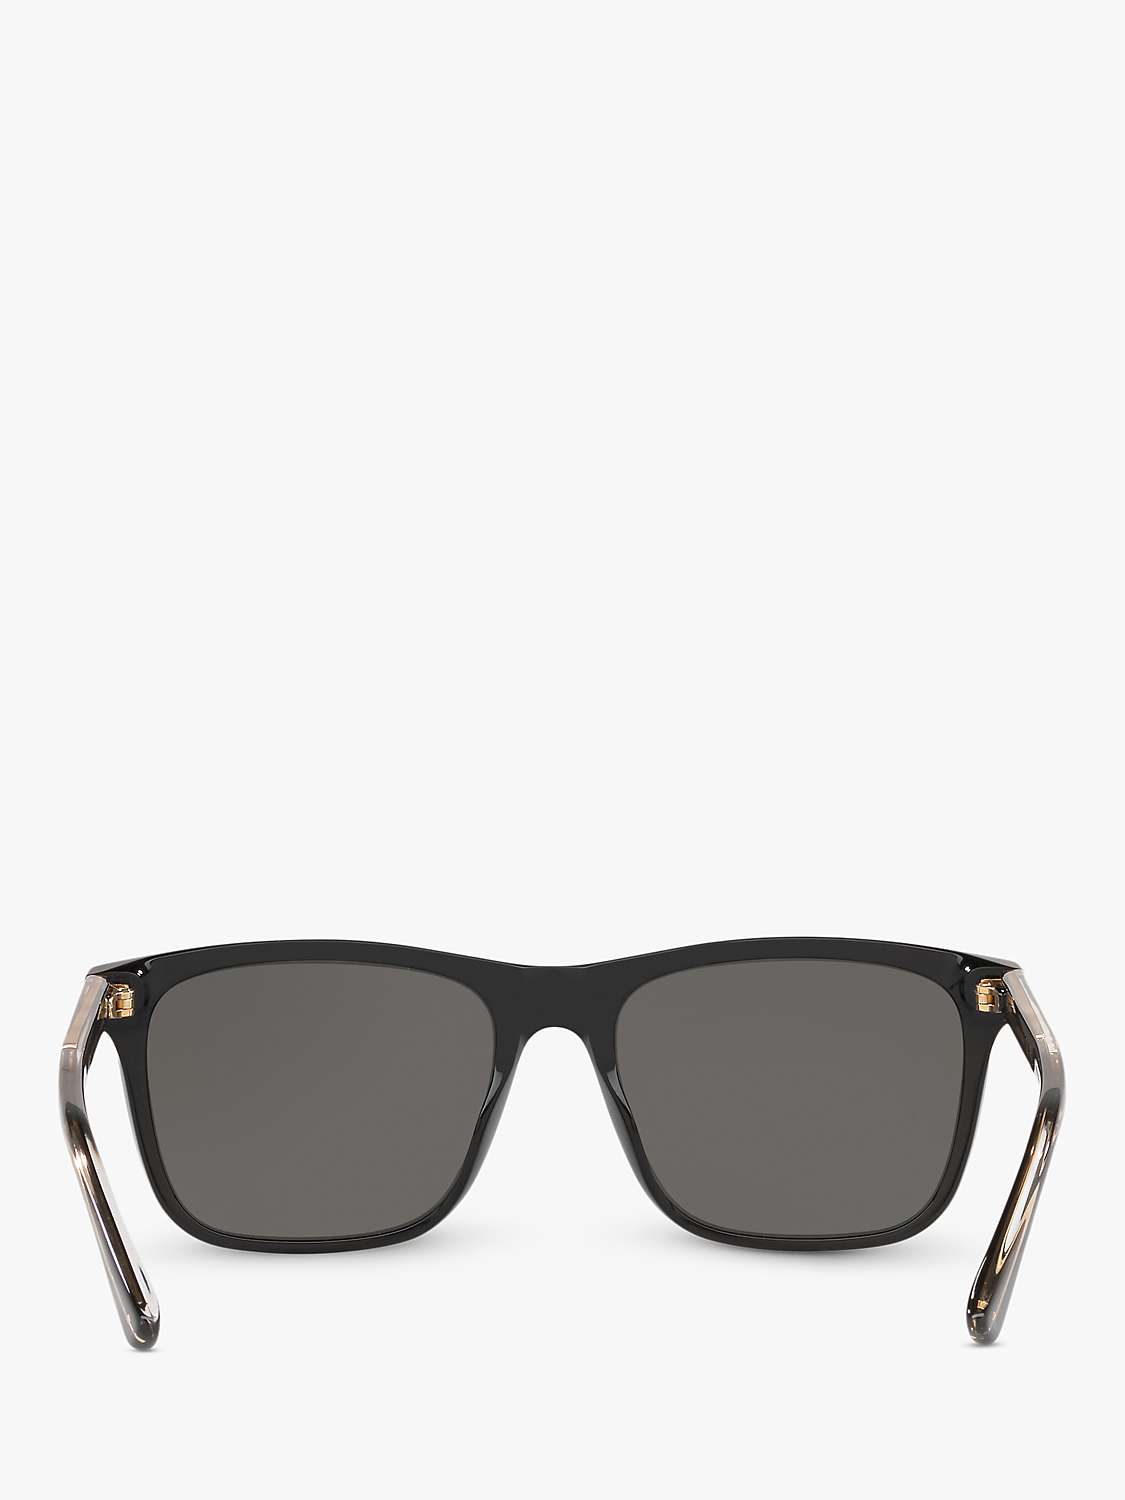 Buy Gucci GG0381SN Men's Rectangular Sunglasses Online at johnlewis.com